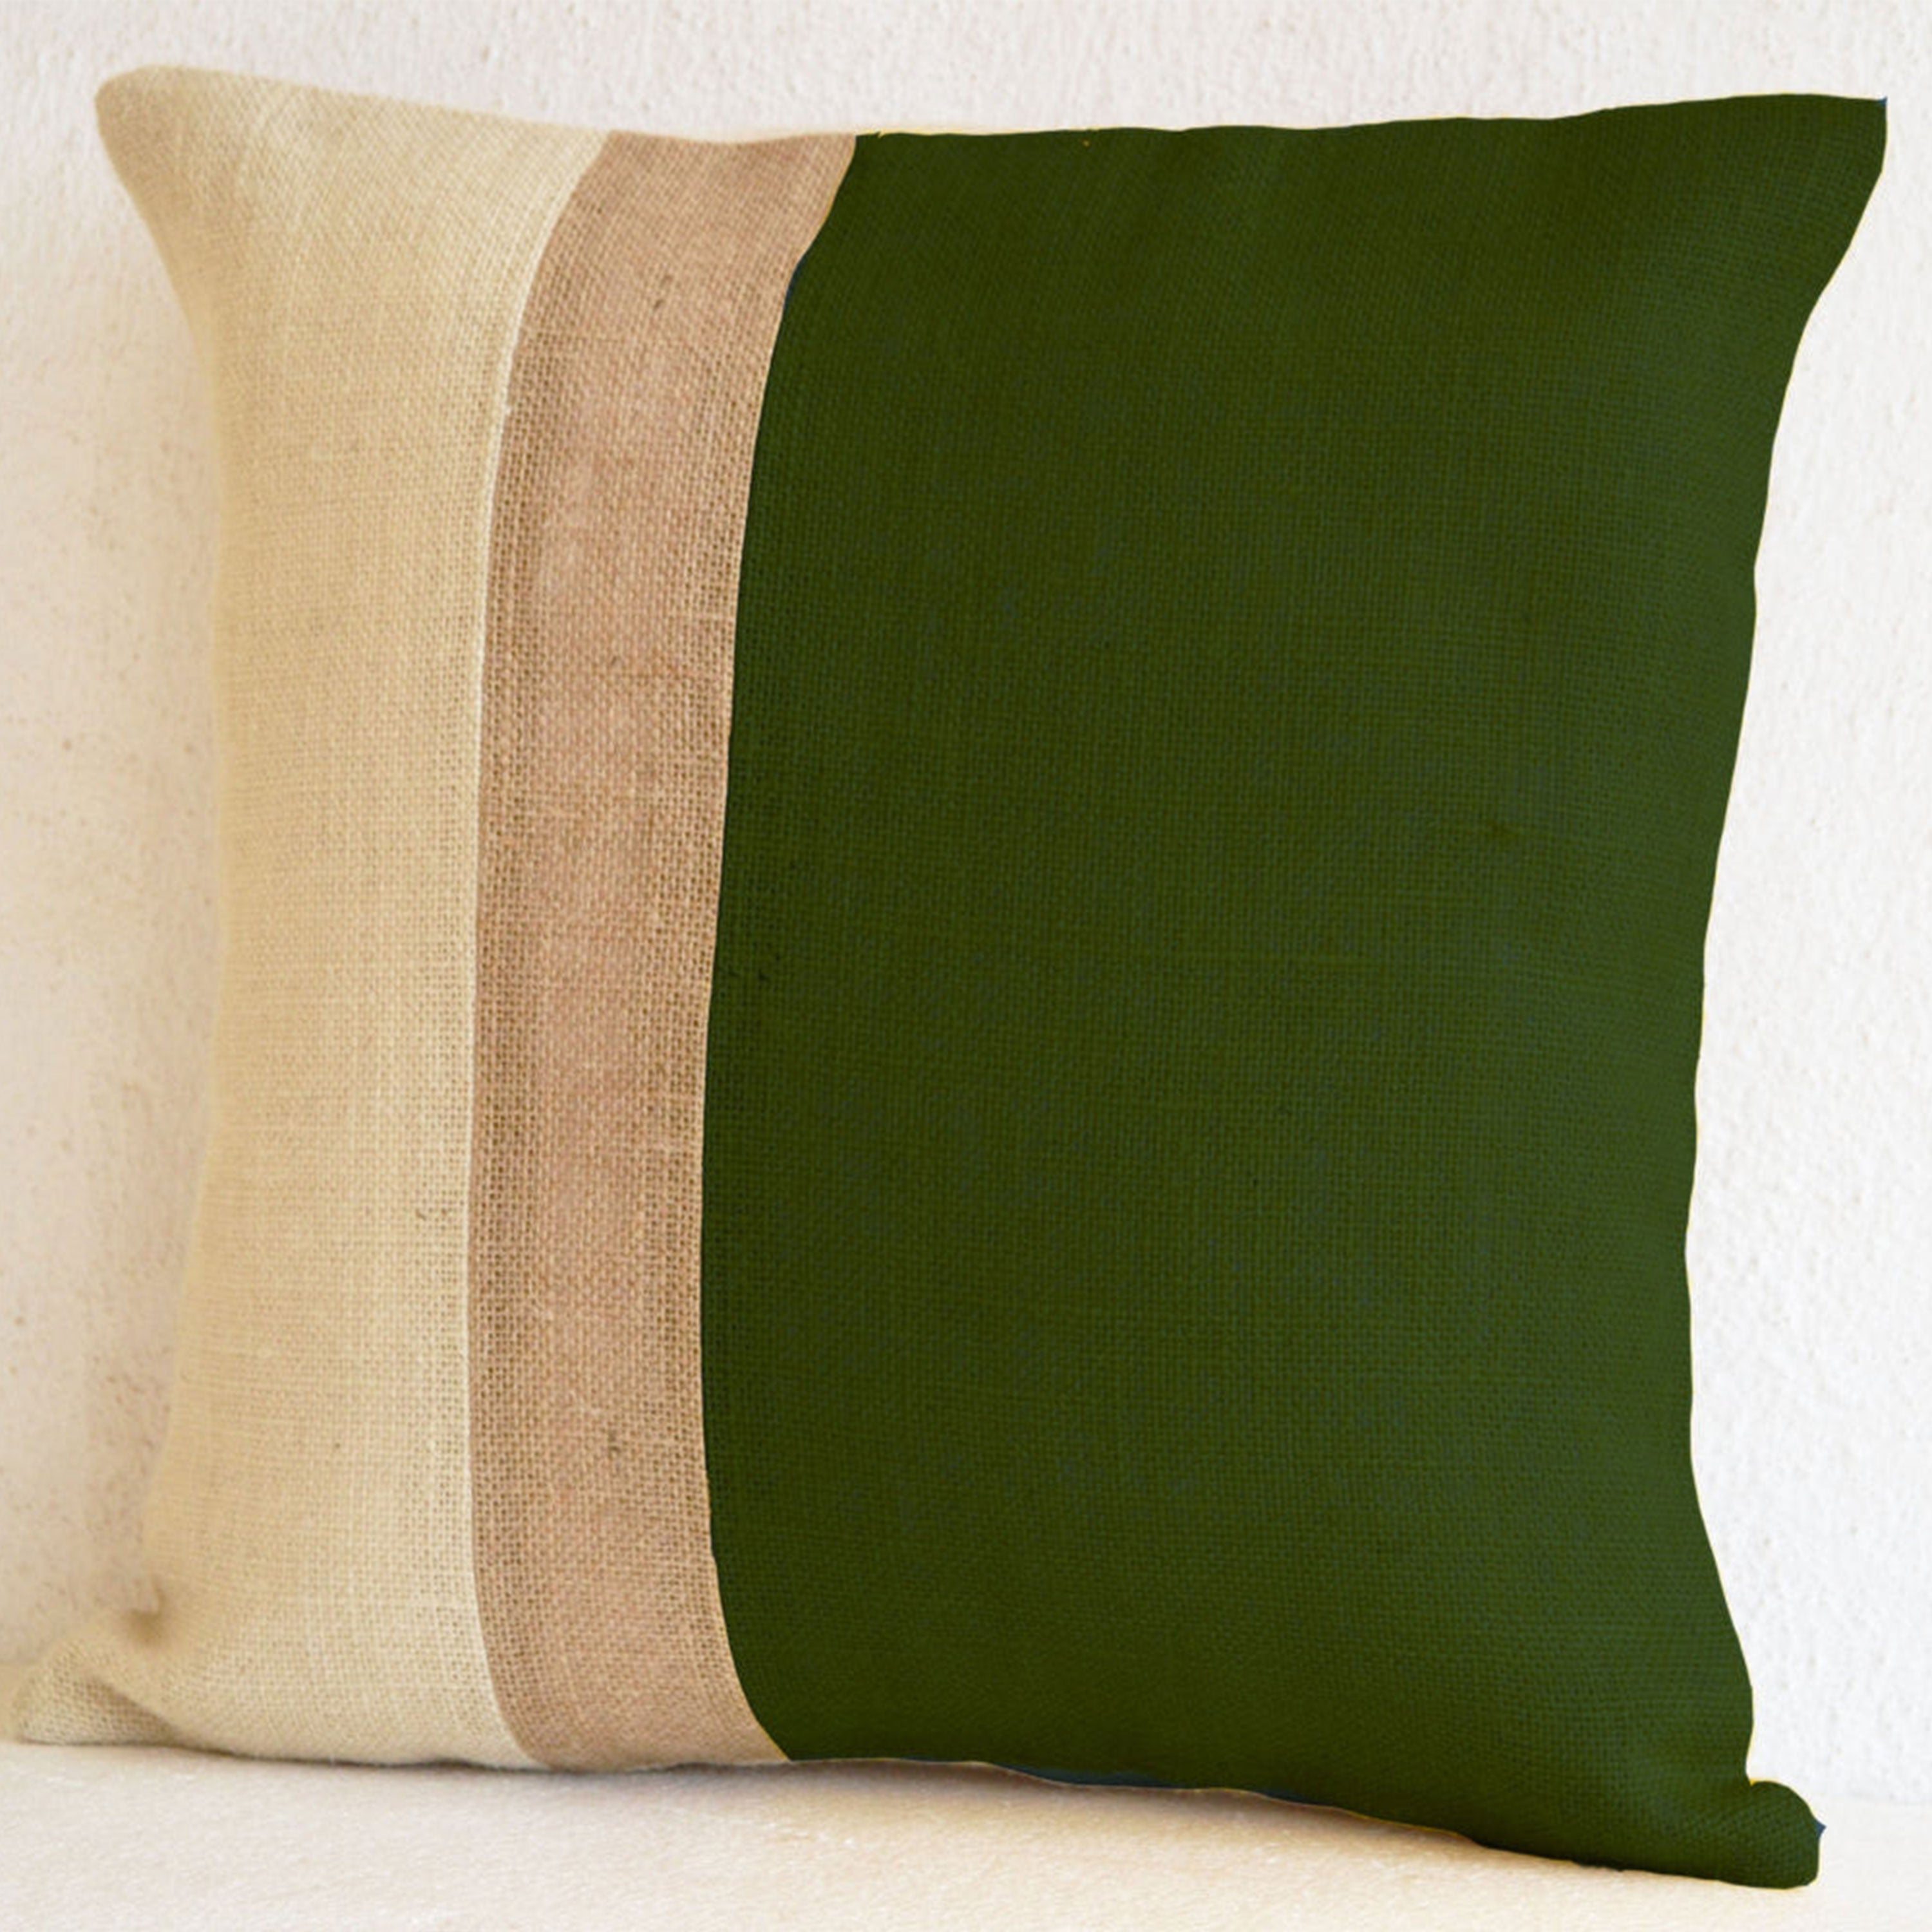 Green Pillow - Burlap Pillow color block - Green Decorative cushion covers - Throw pillows - gift 18X18 - Green Euro Sham - Couch pillow